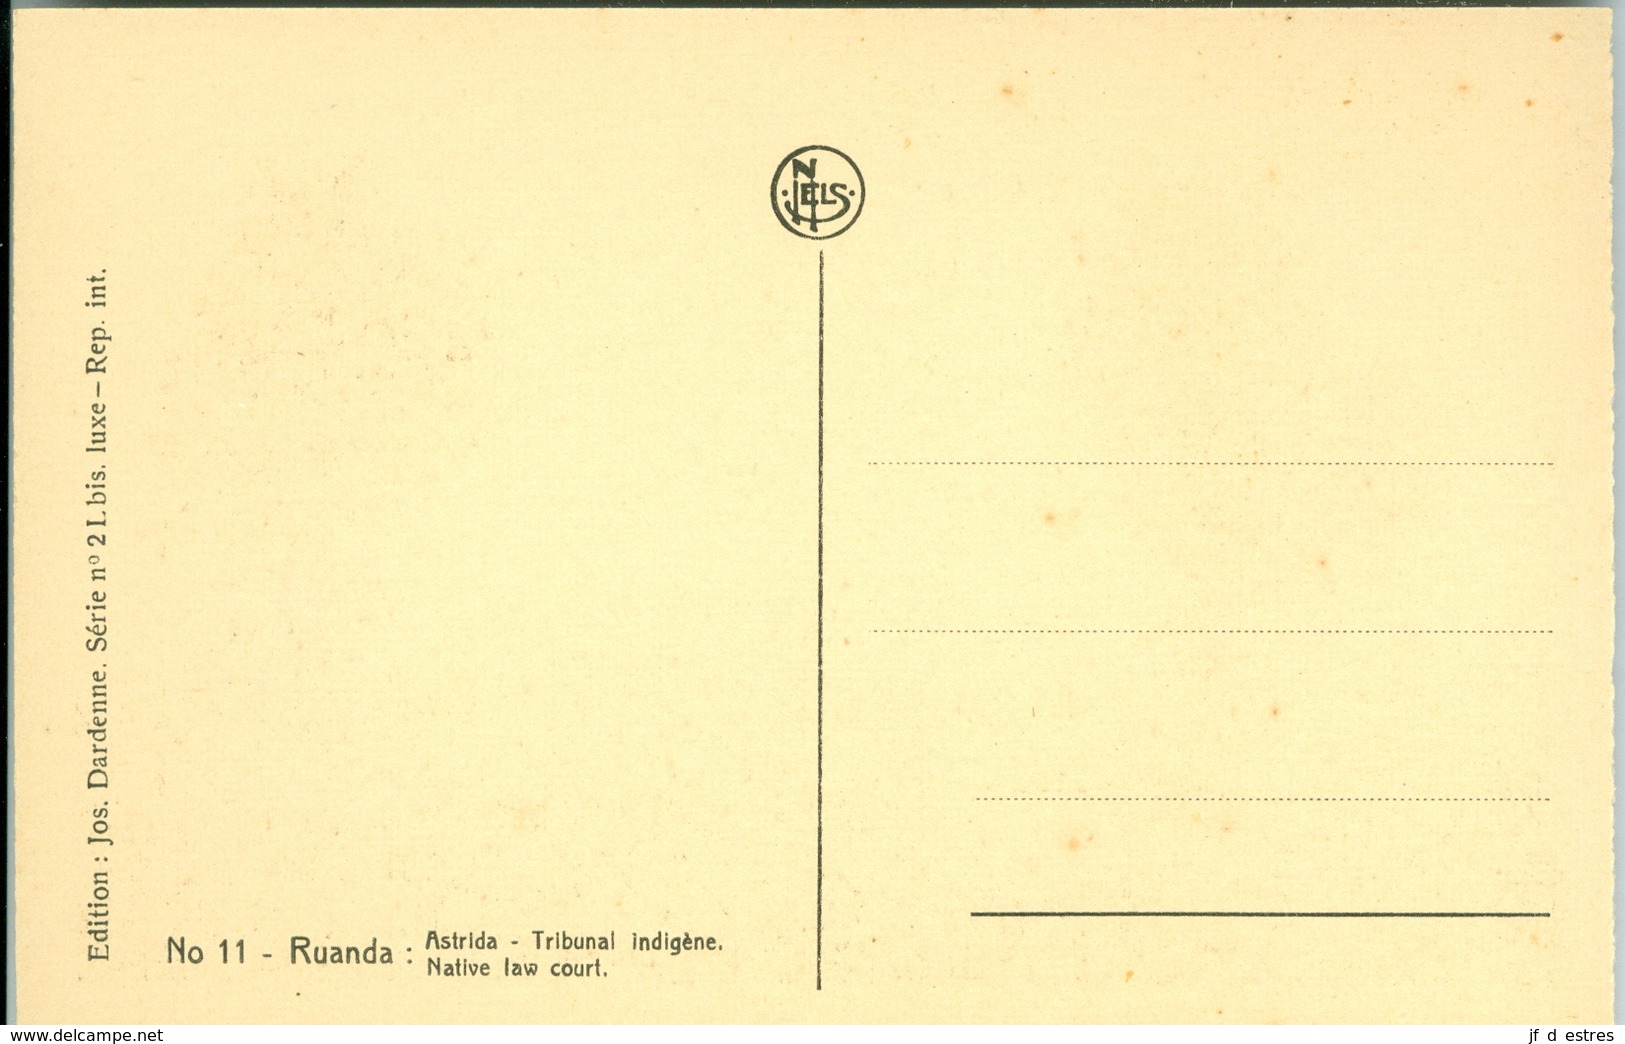 12 CP Ruanda Urundi Astrida & Kigali Ed. Jos Dardenne 1 carnet sér. 2 L bis. vers 1930 Ethnographie Rwanda Burundi